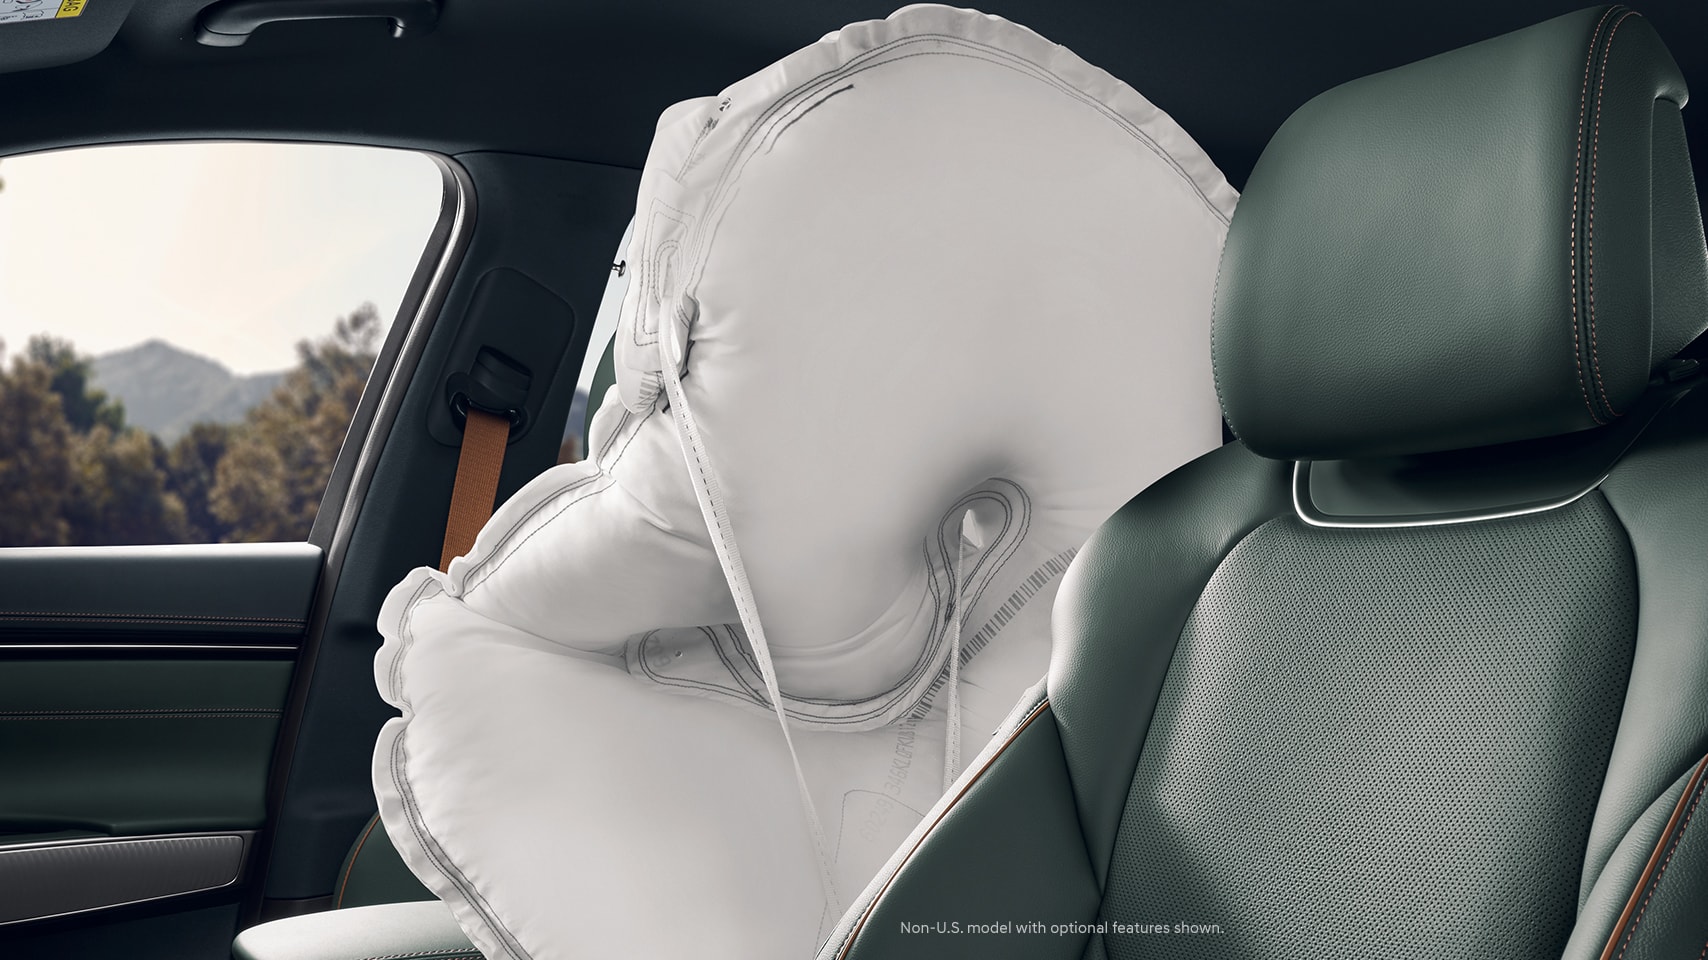 2023 Genesis GV70 interior with airbags deployed.